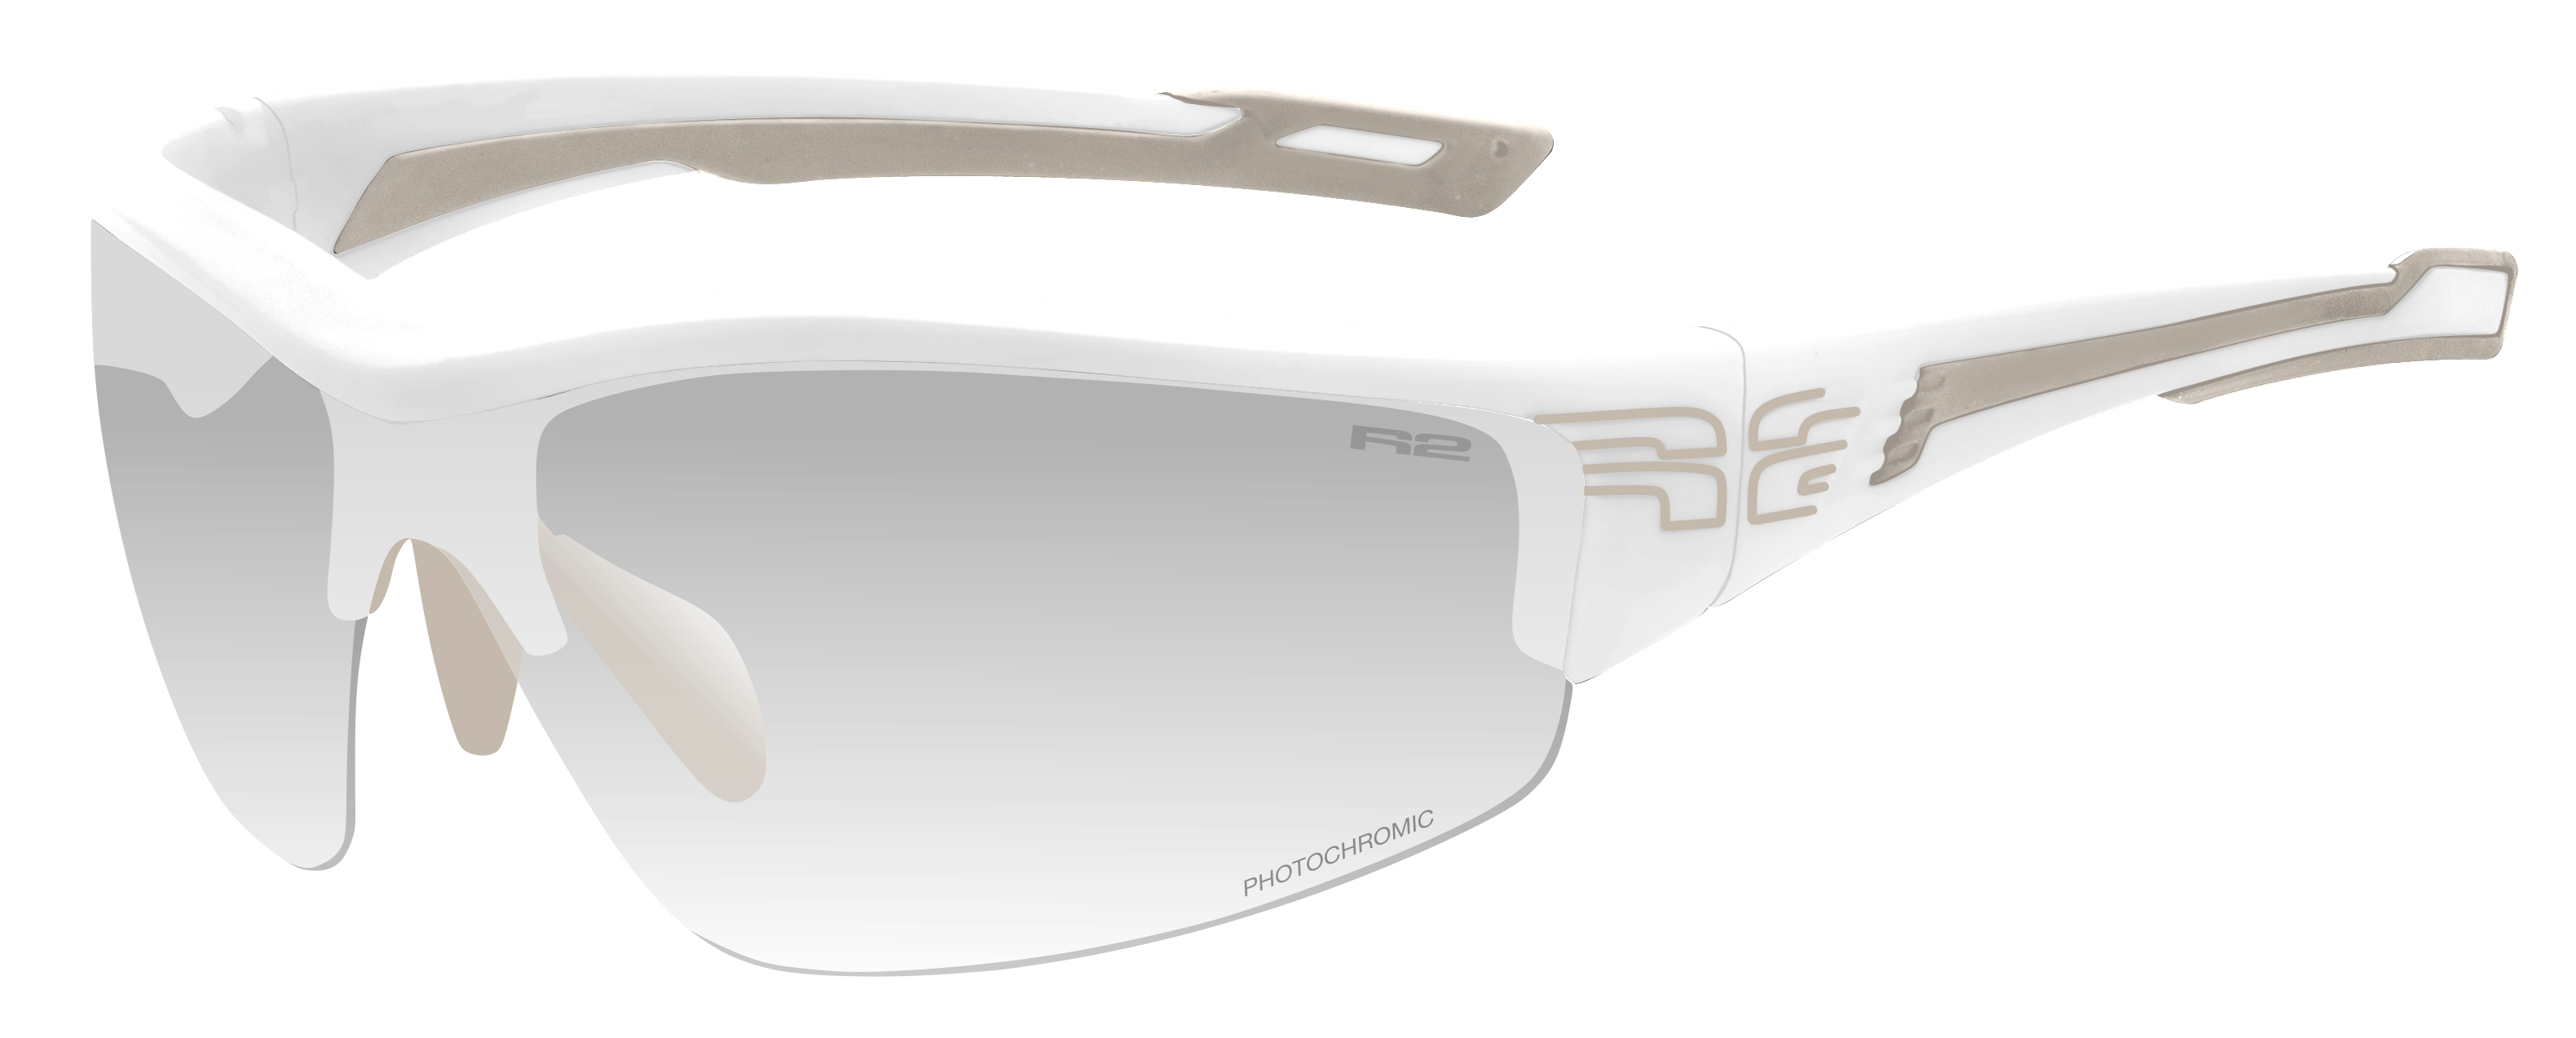 Photochromatic sunglasses R2 WHEELLER AT038S